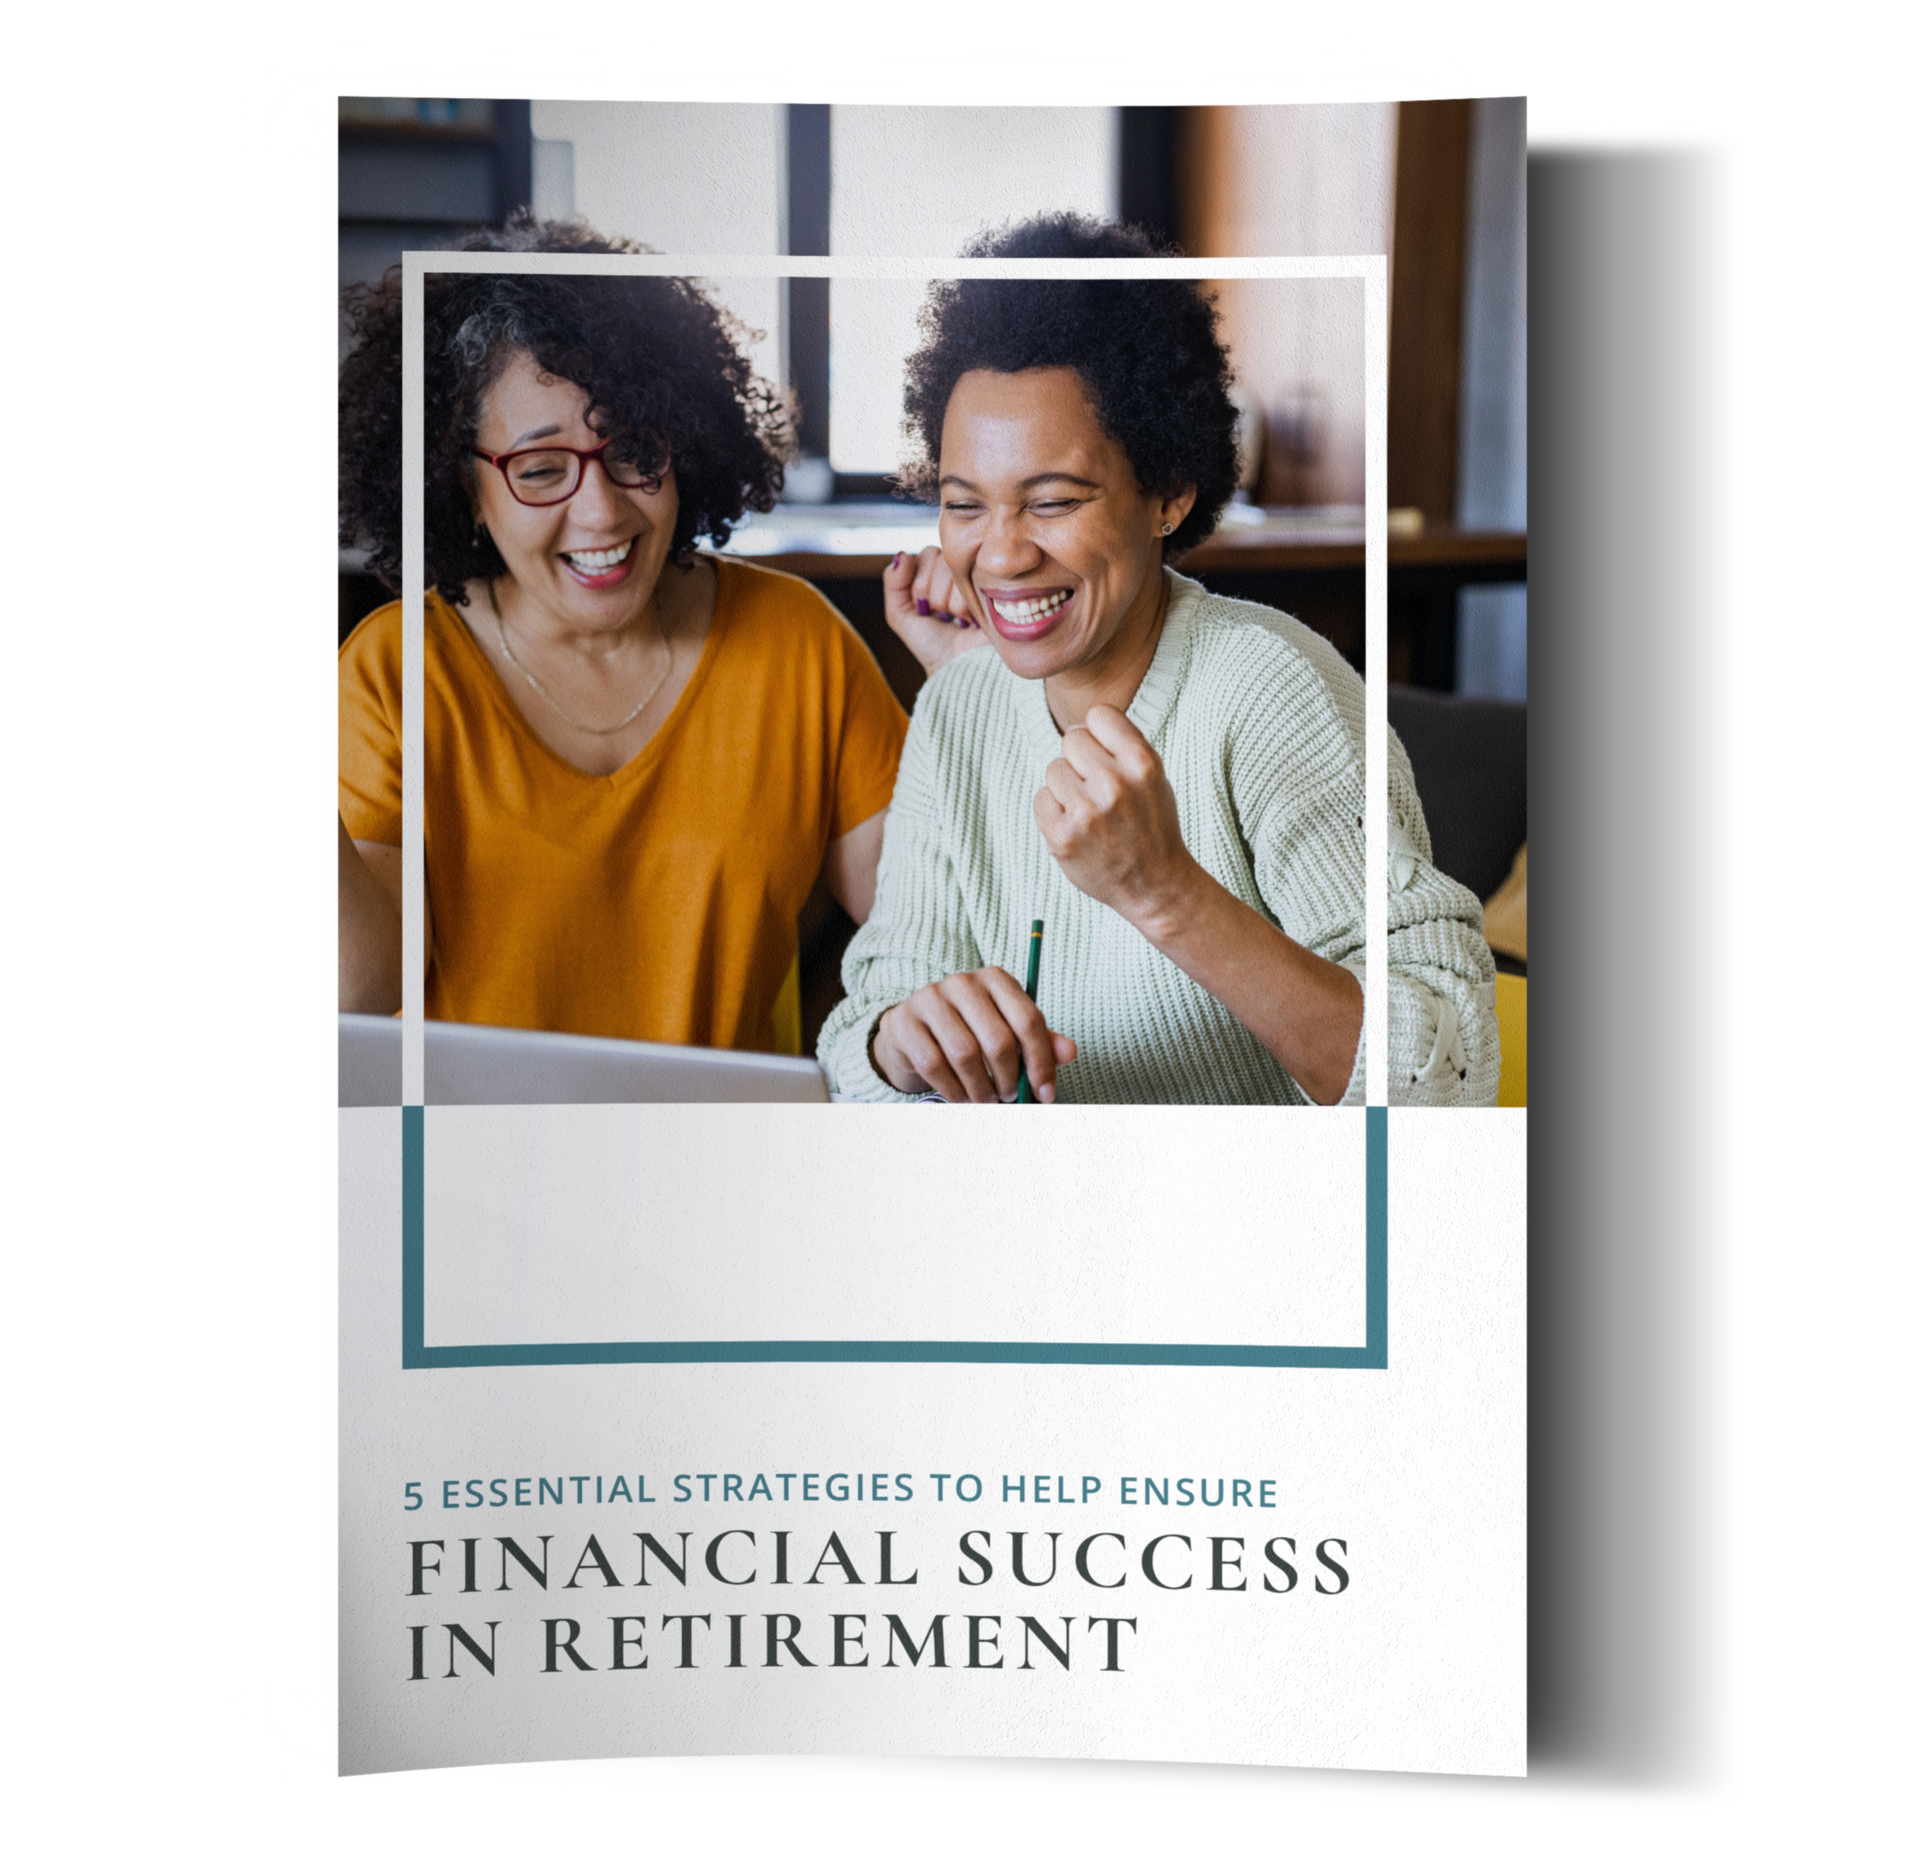 5 Essential Strategies to Help Ensure Financial Success in Retirement